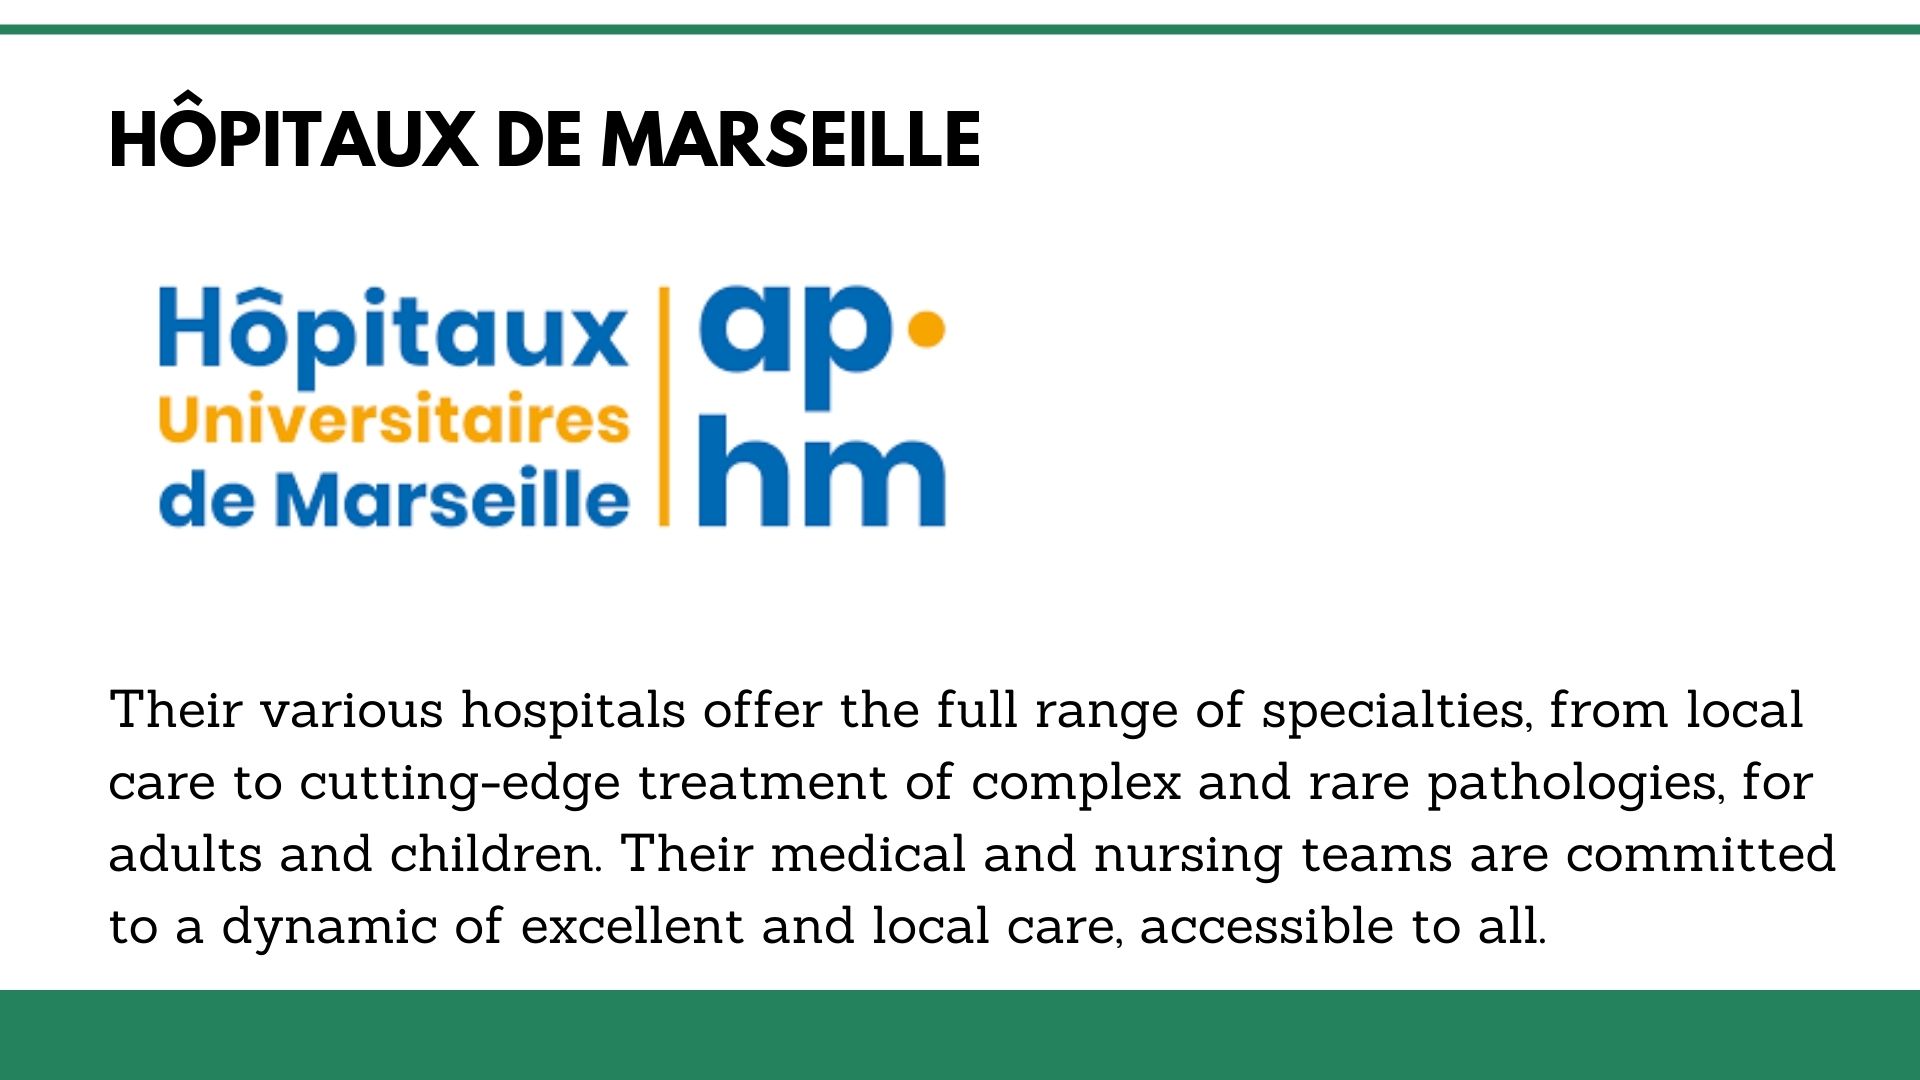 Hôpitaux de Marseille